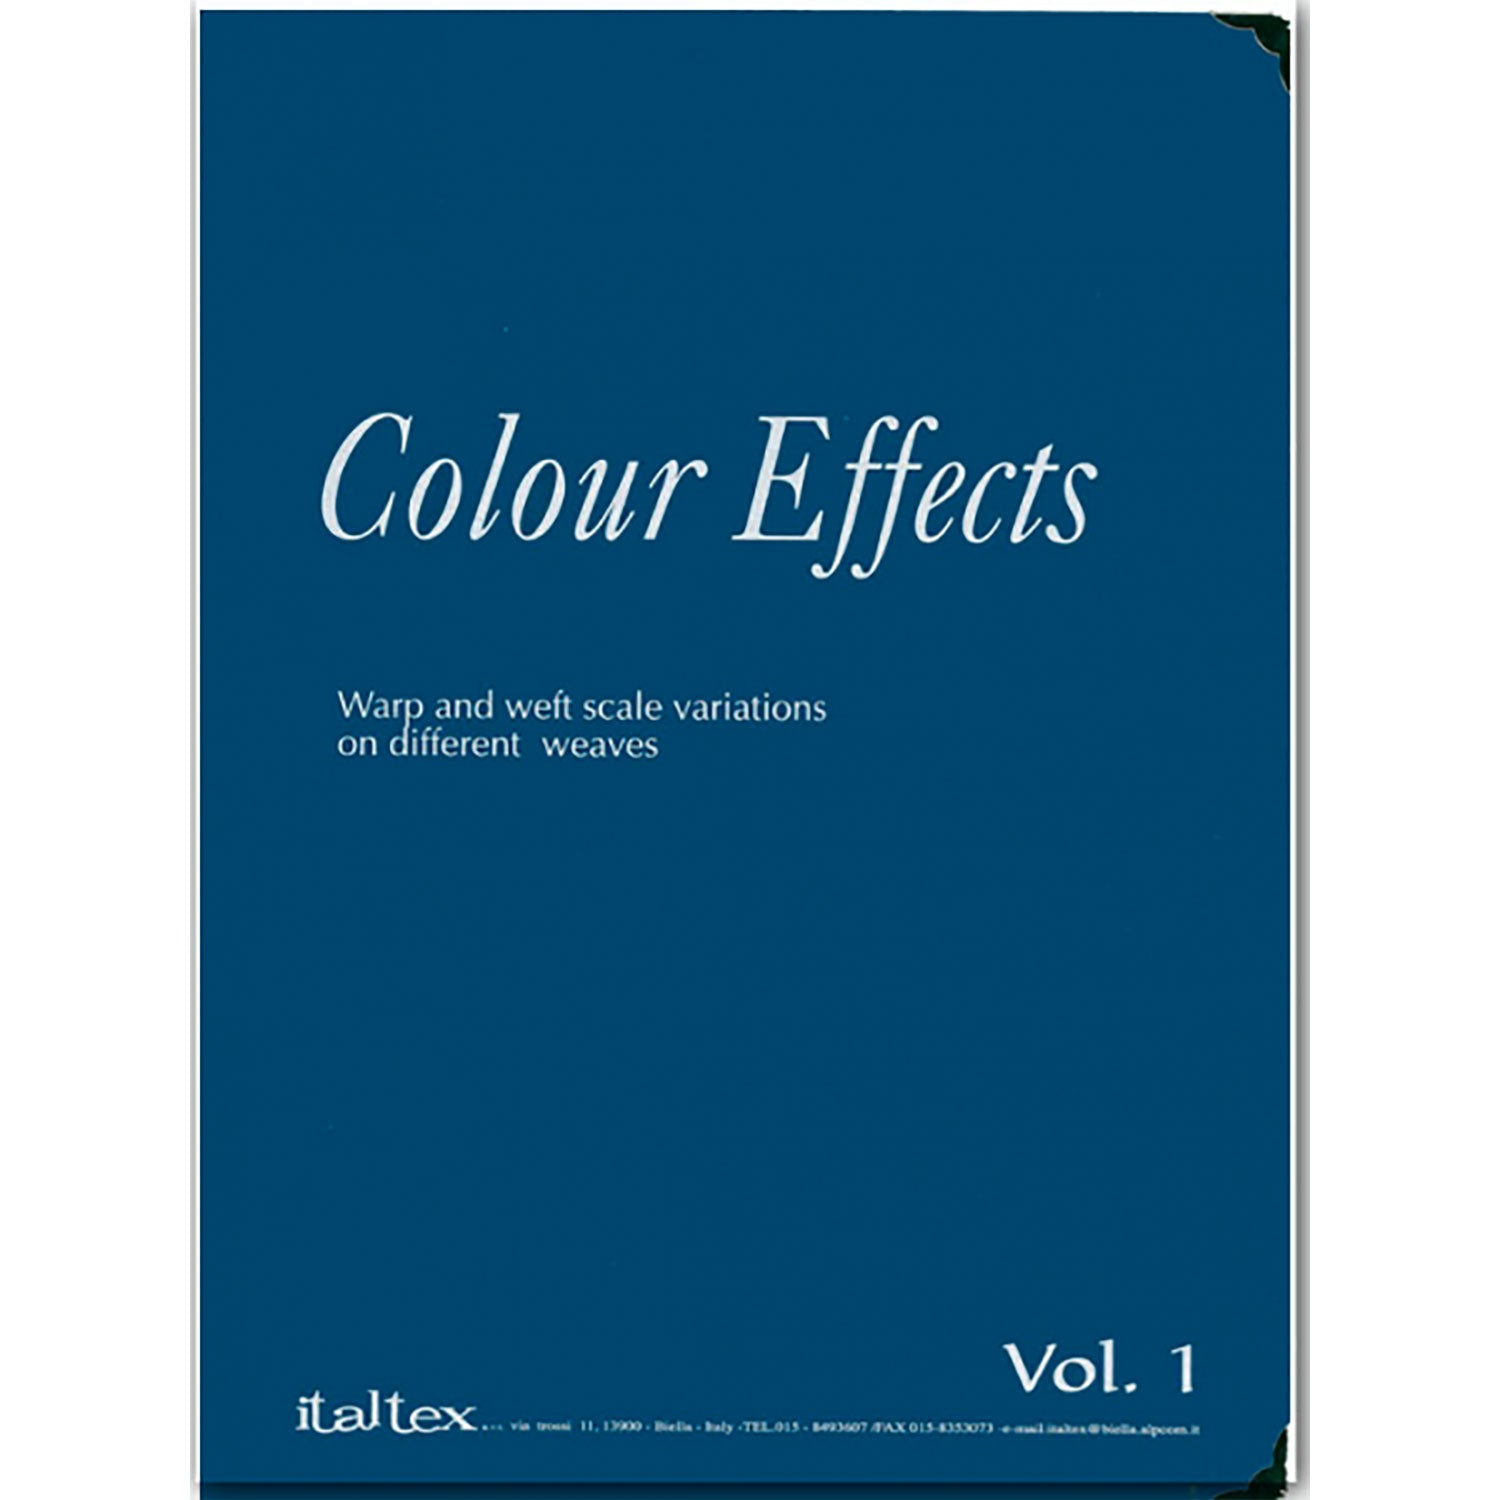 Colour Effects